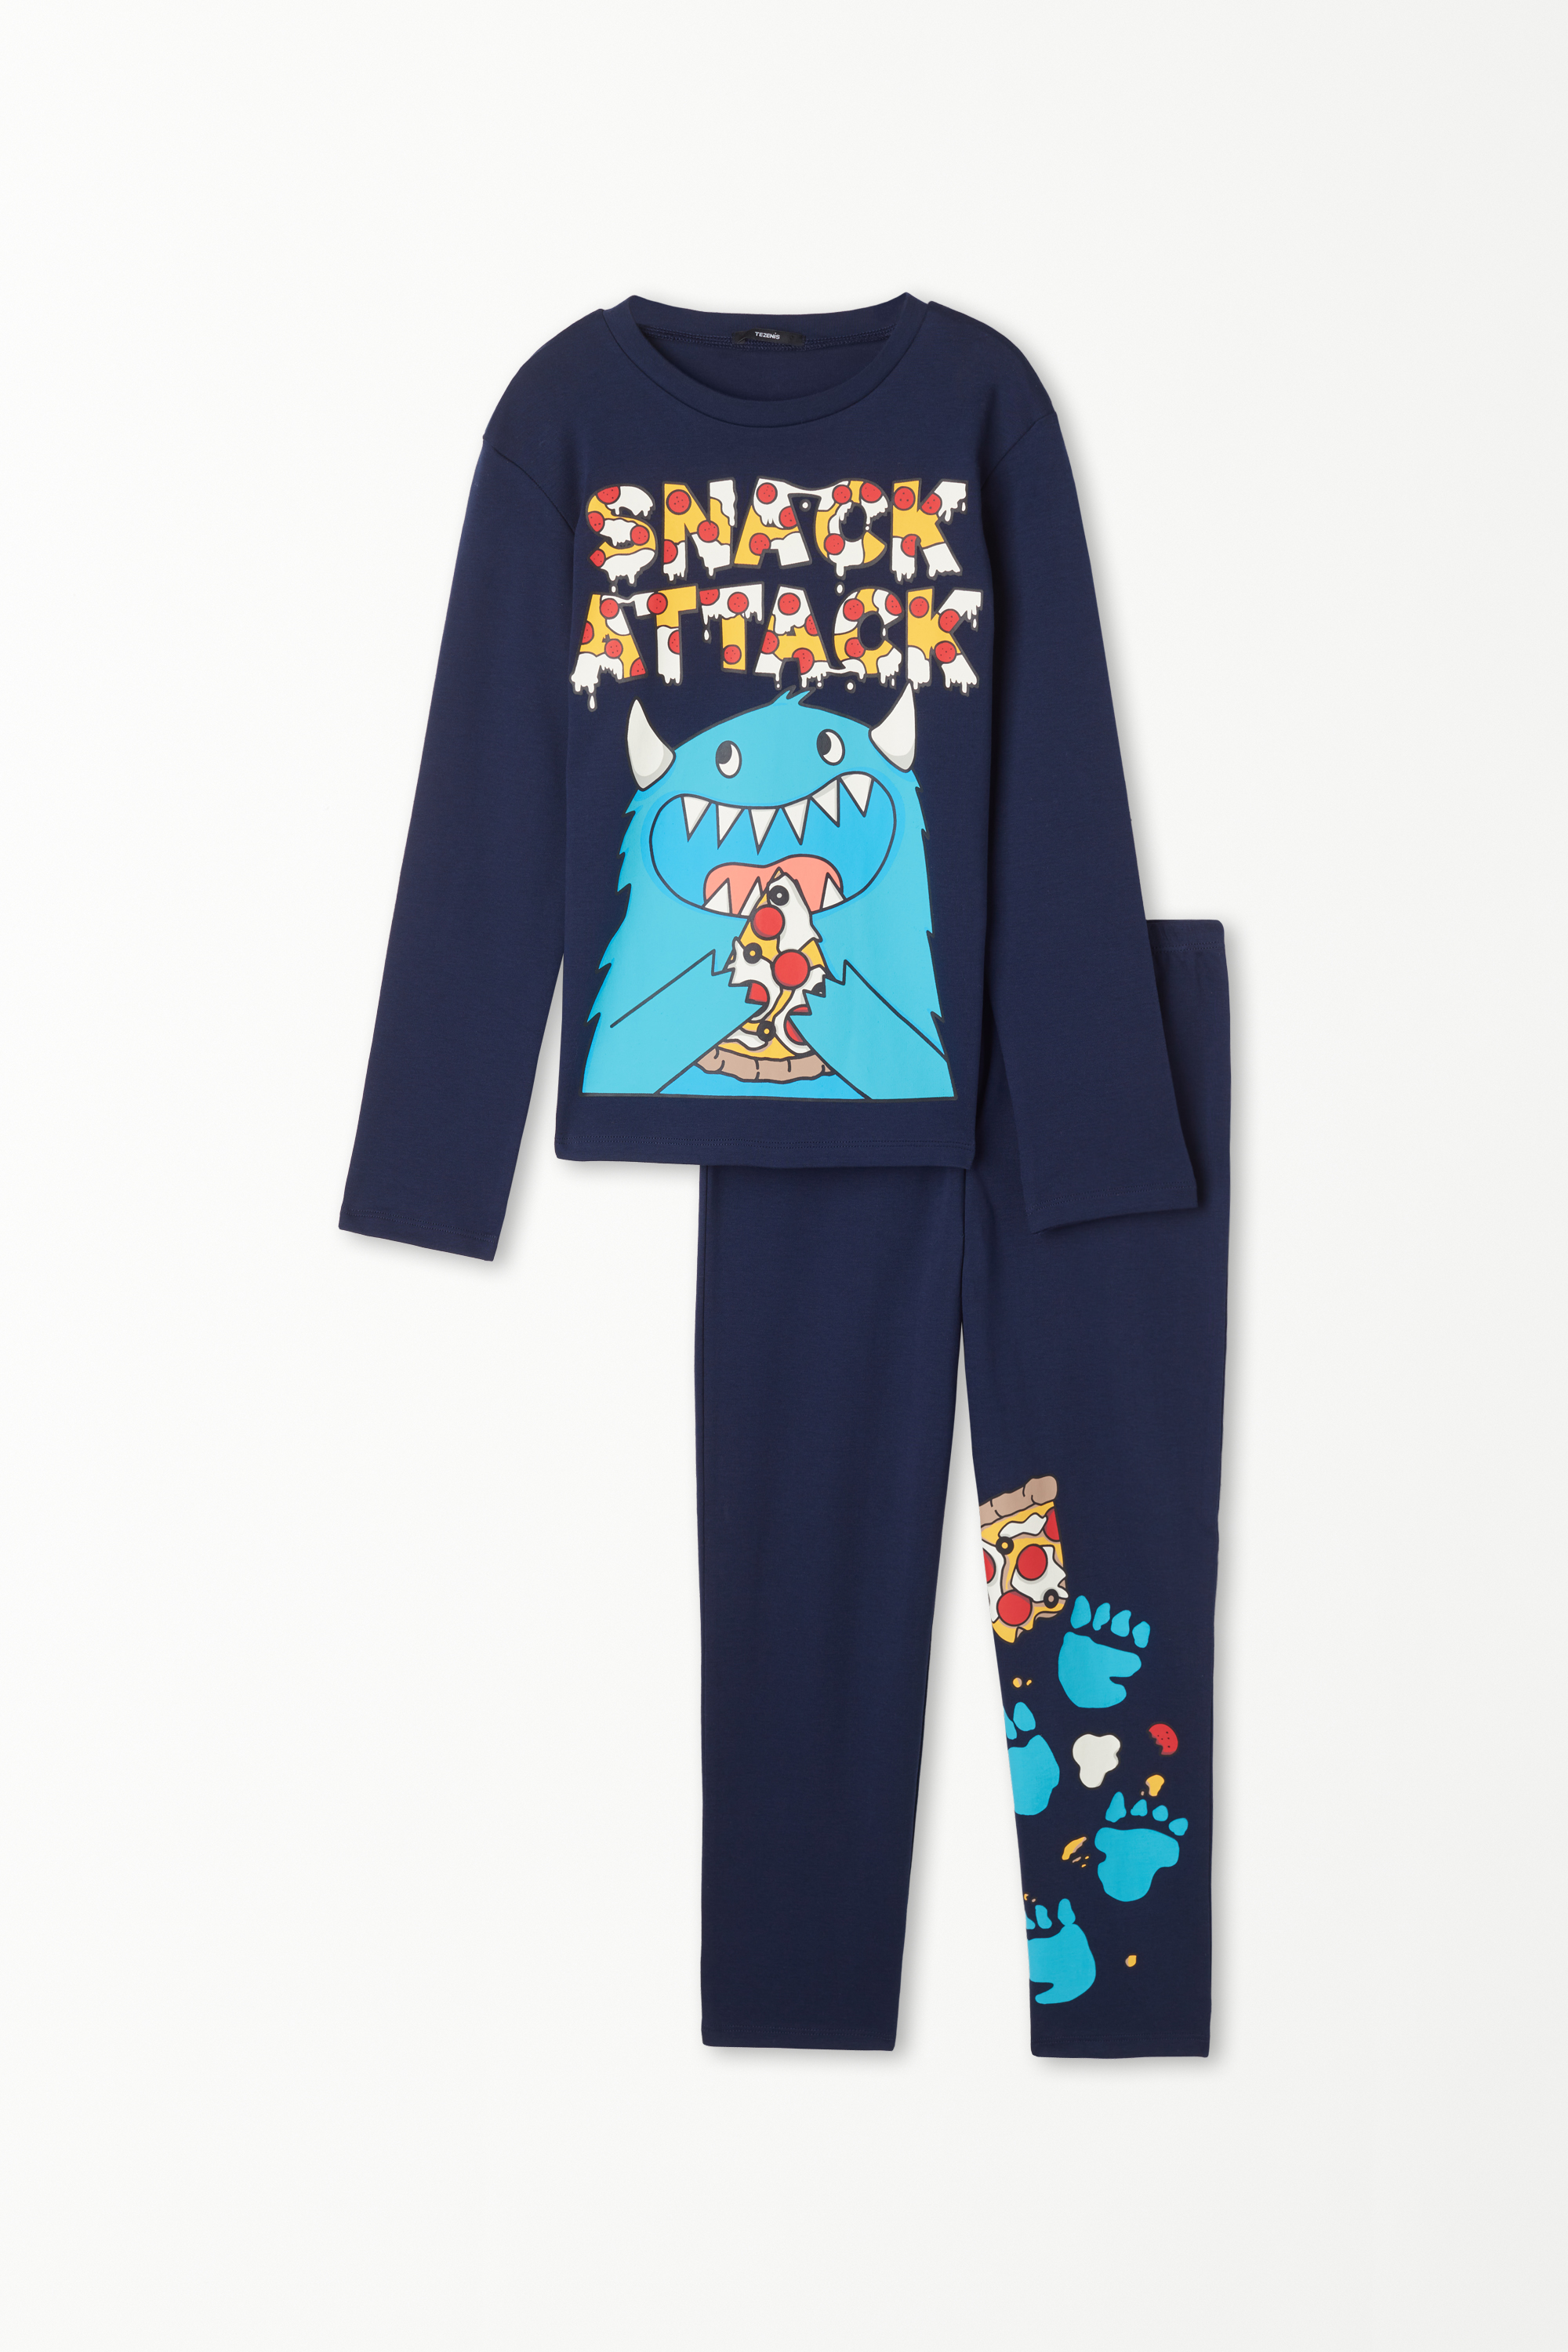 Boys’ Long Heavy Cotton Pyjamas with “Snack Attack” Print